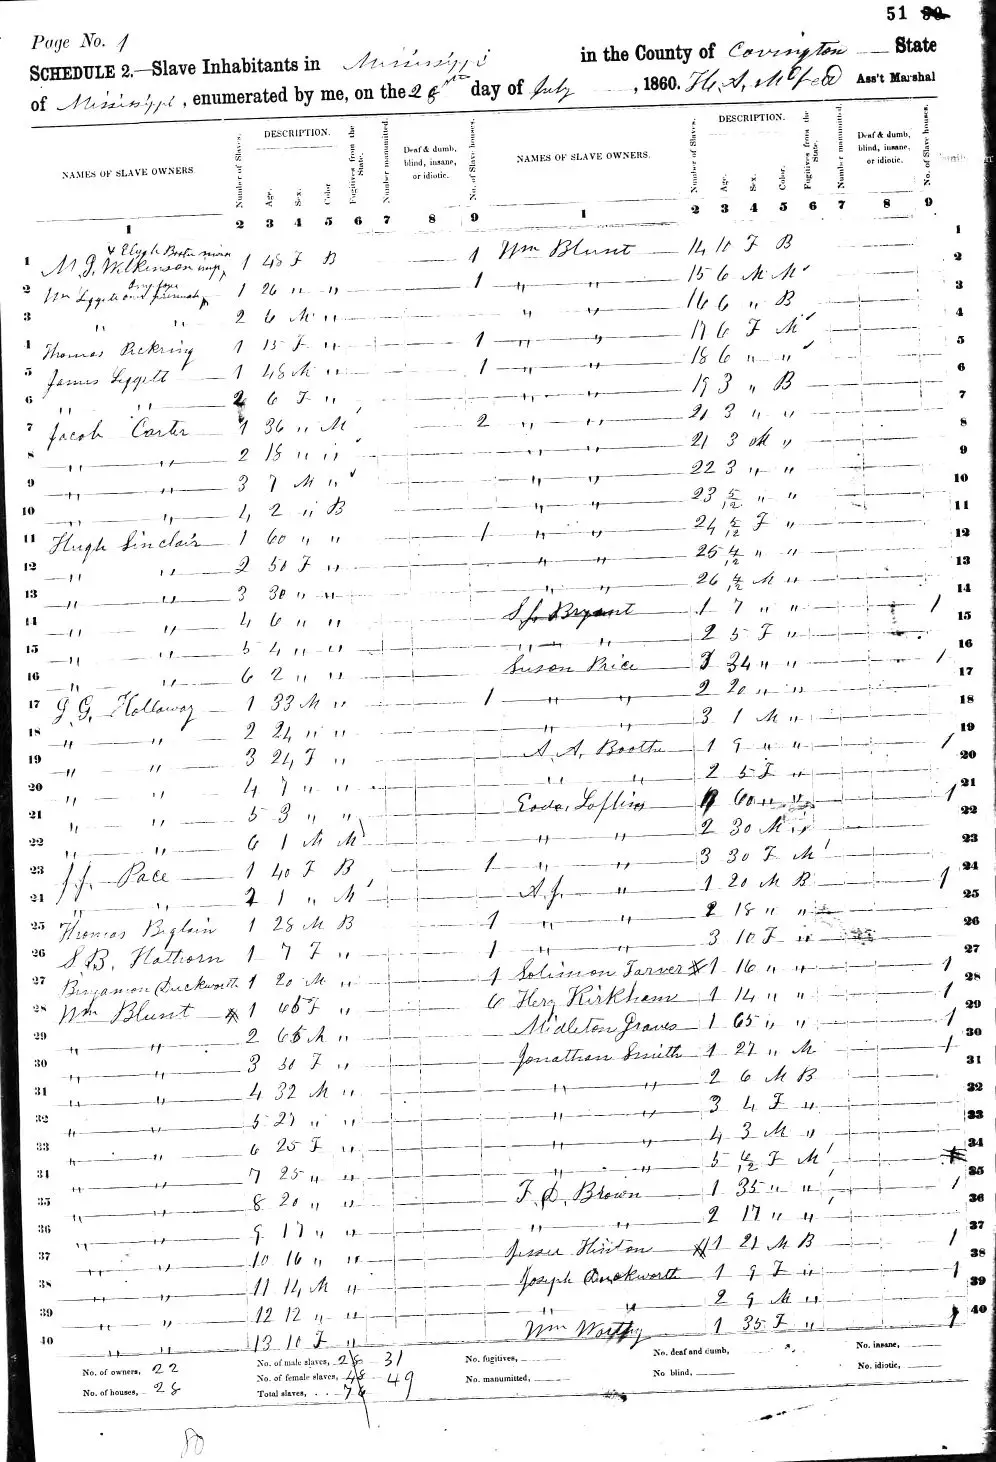 Joseph Ducksworth's 1860 slave schedule report was used in my article. Best Strategies: Revealing African American Ancestry Before 1870.